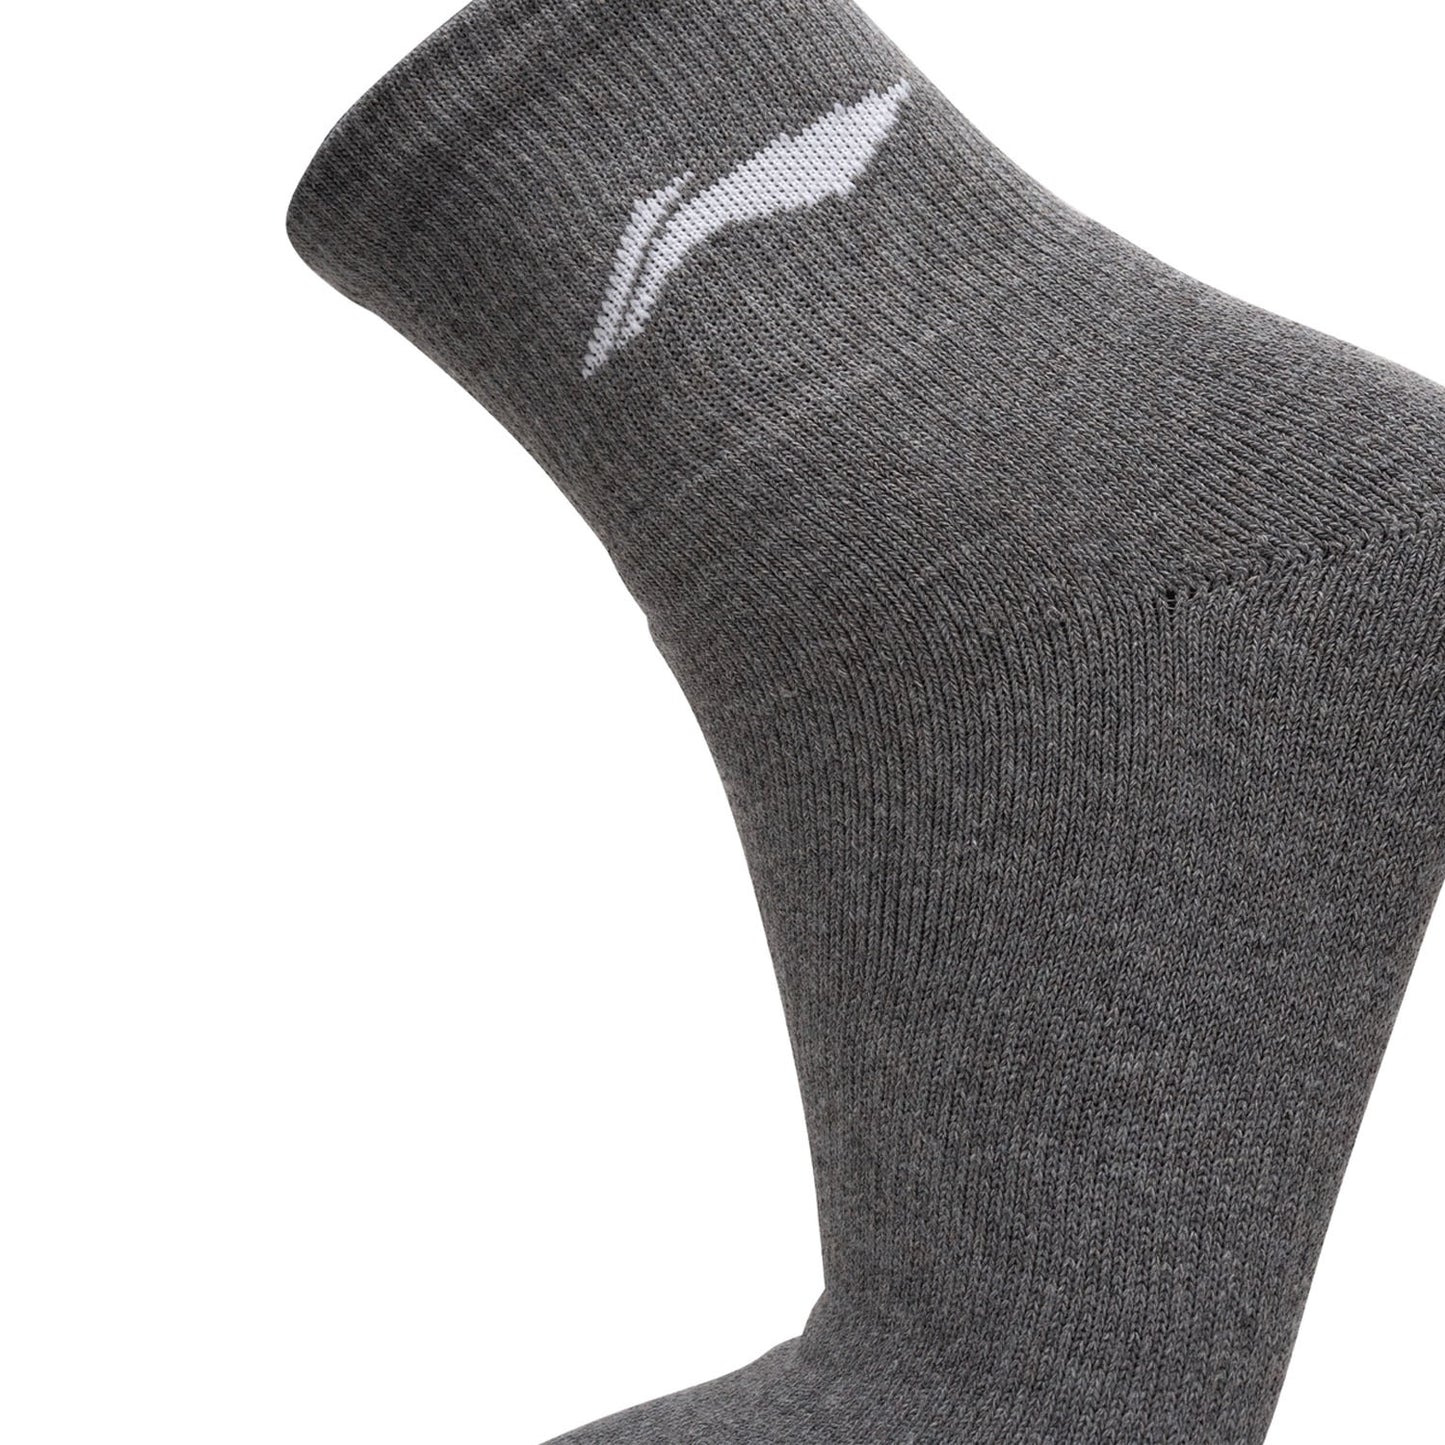 Li-Ning AWLS179 Cotton Men's Sports Socks, 1 Pair - Best Price online Prokicksports.com